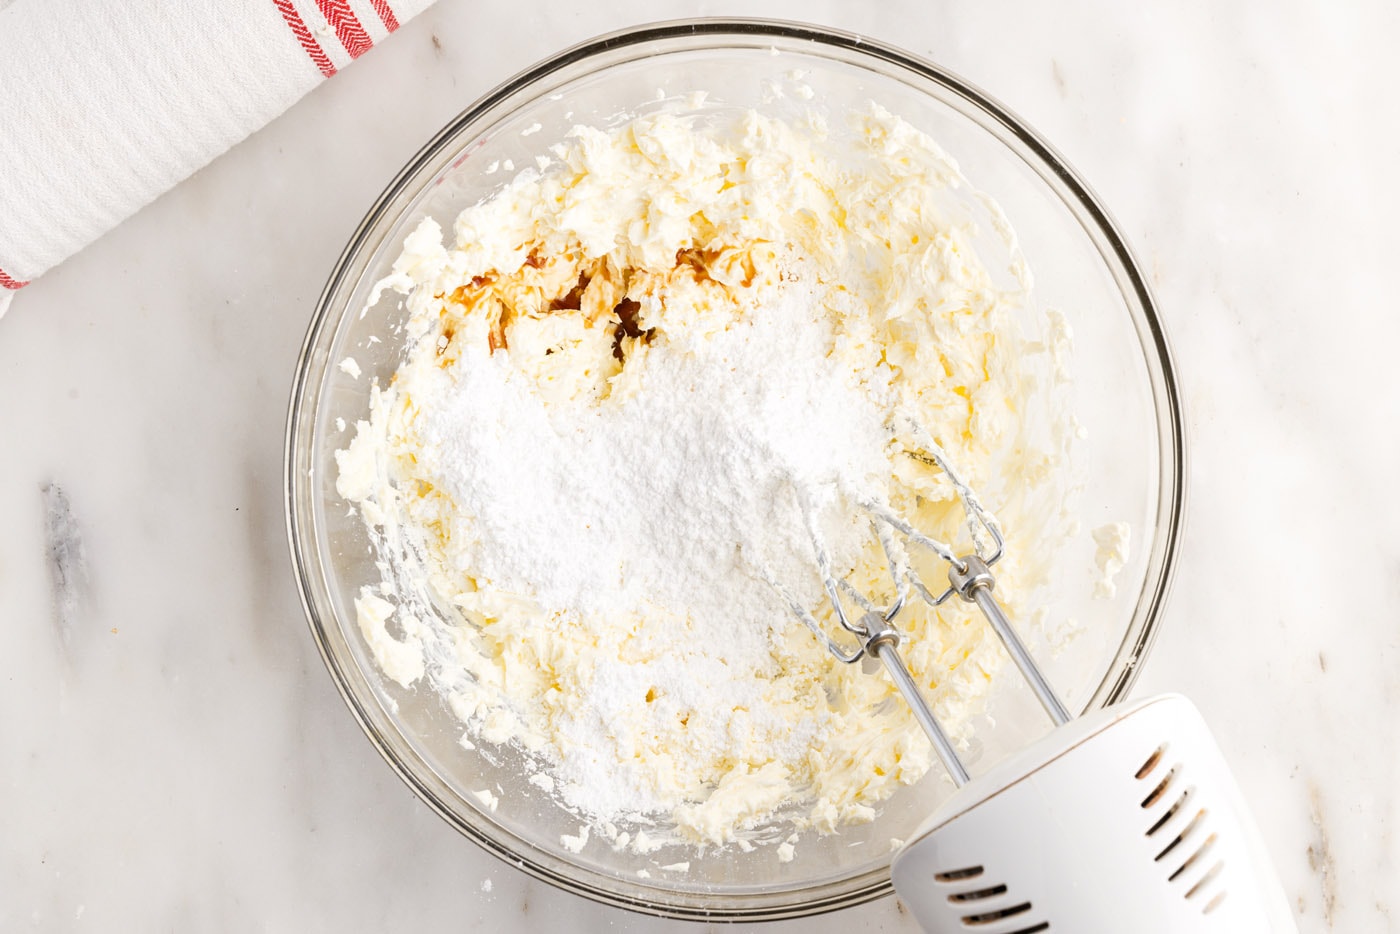 vanilla and powdered sugar added to cream cheese mixture